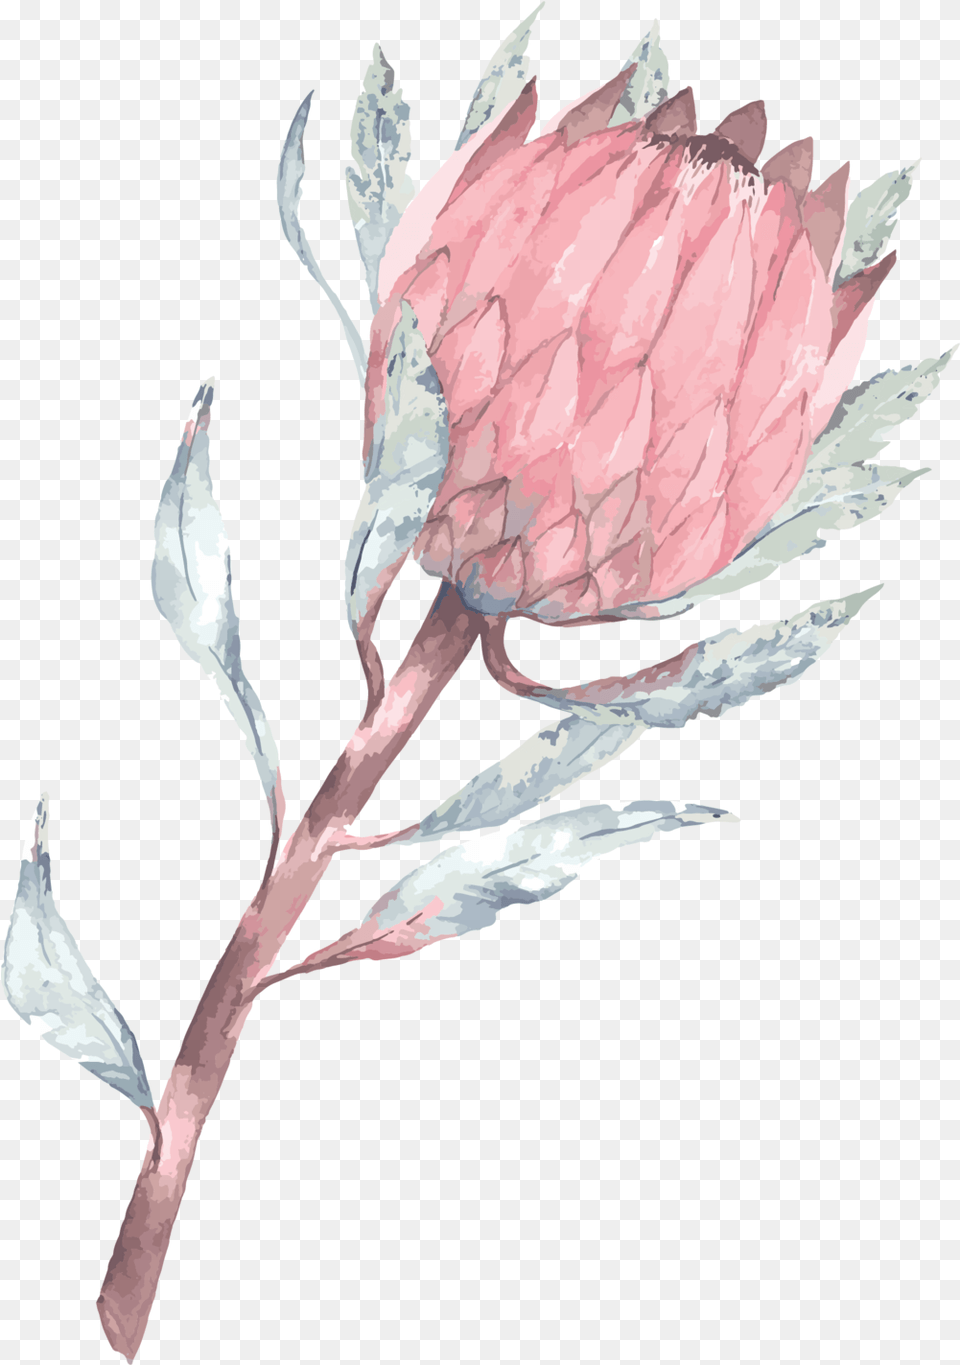 Phone Wallpaper Protea Download Protea Flower Protea Backgrounds, Sprout, Plant, Petal, Leaf Png